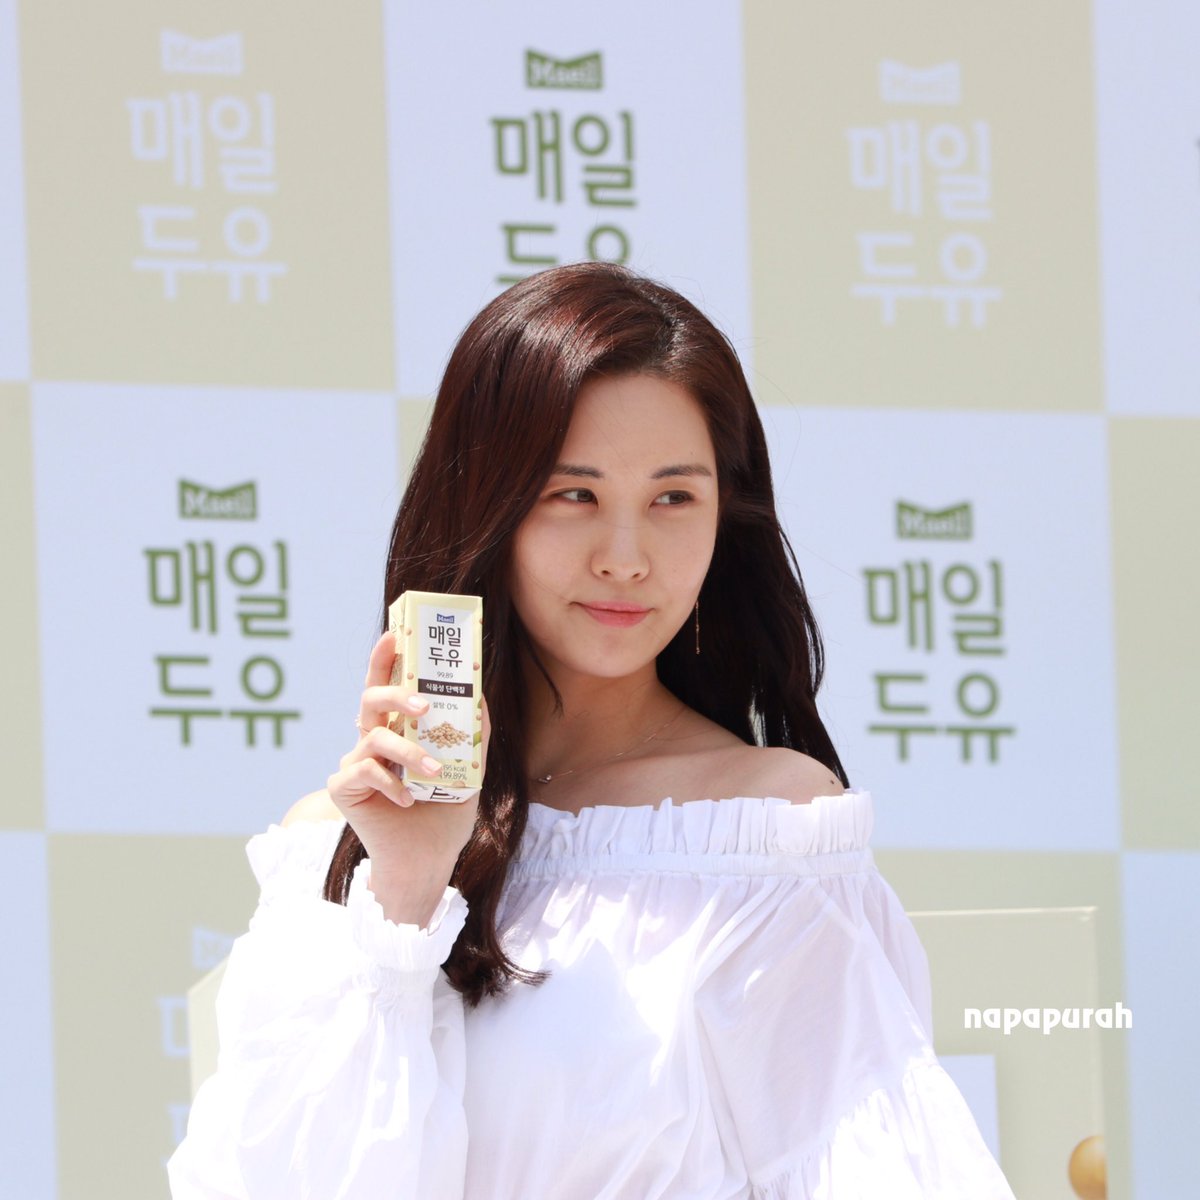  [PIC][03-06-2017]SeoHyun tham dự sự kiện “City Forestival - Maeil Duyou 'Confidence Diary'” vào chiều nay - Page 3 DBpDNwIUMAAkoHz